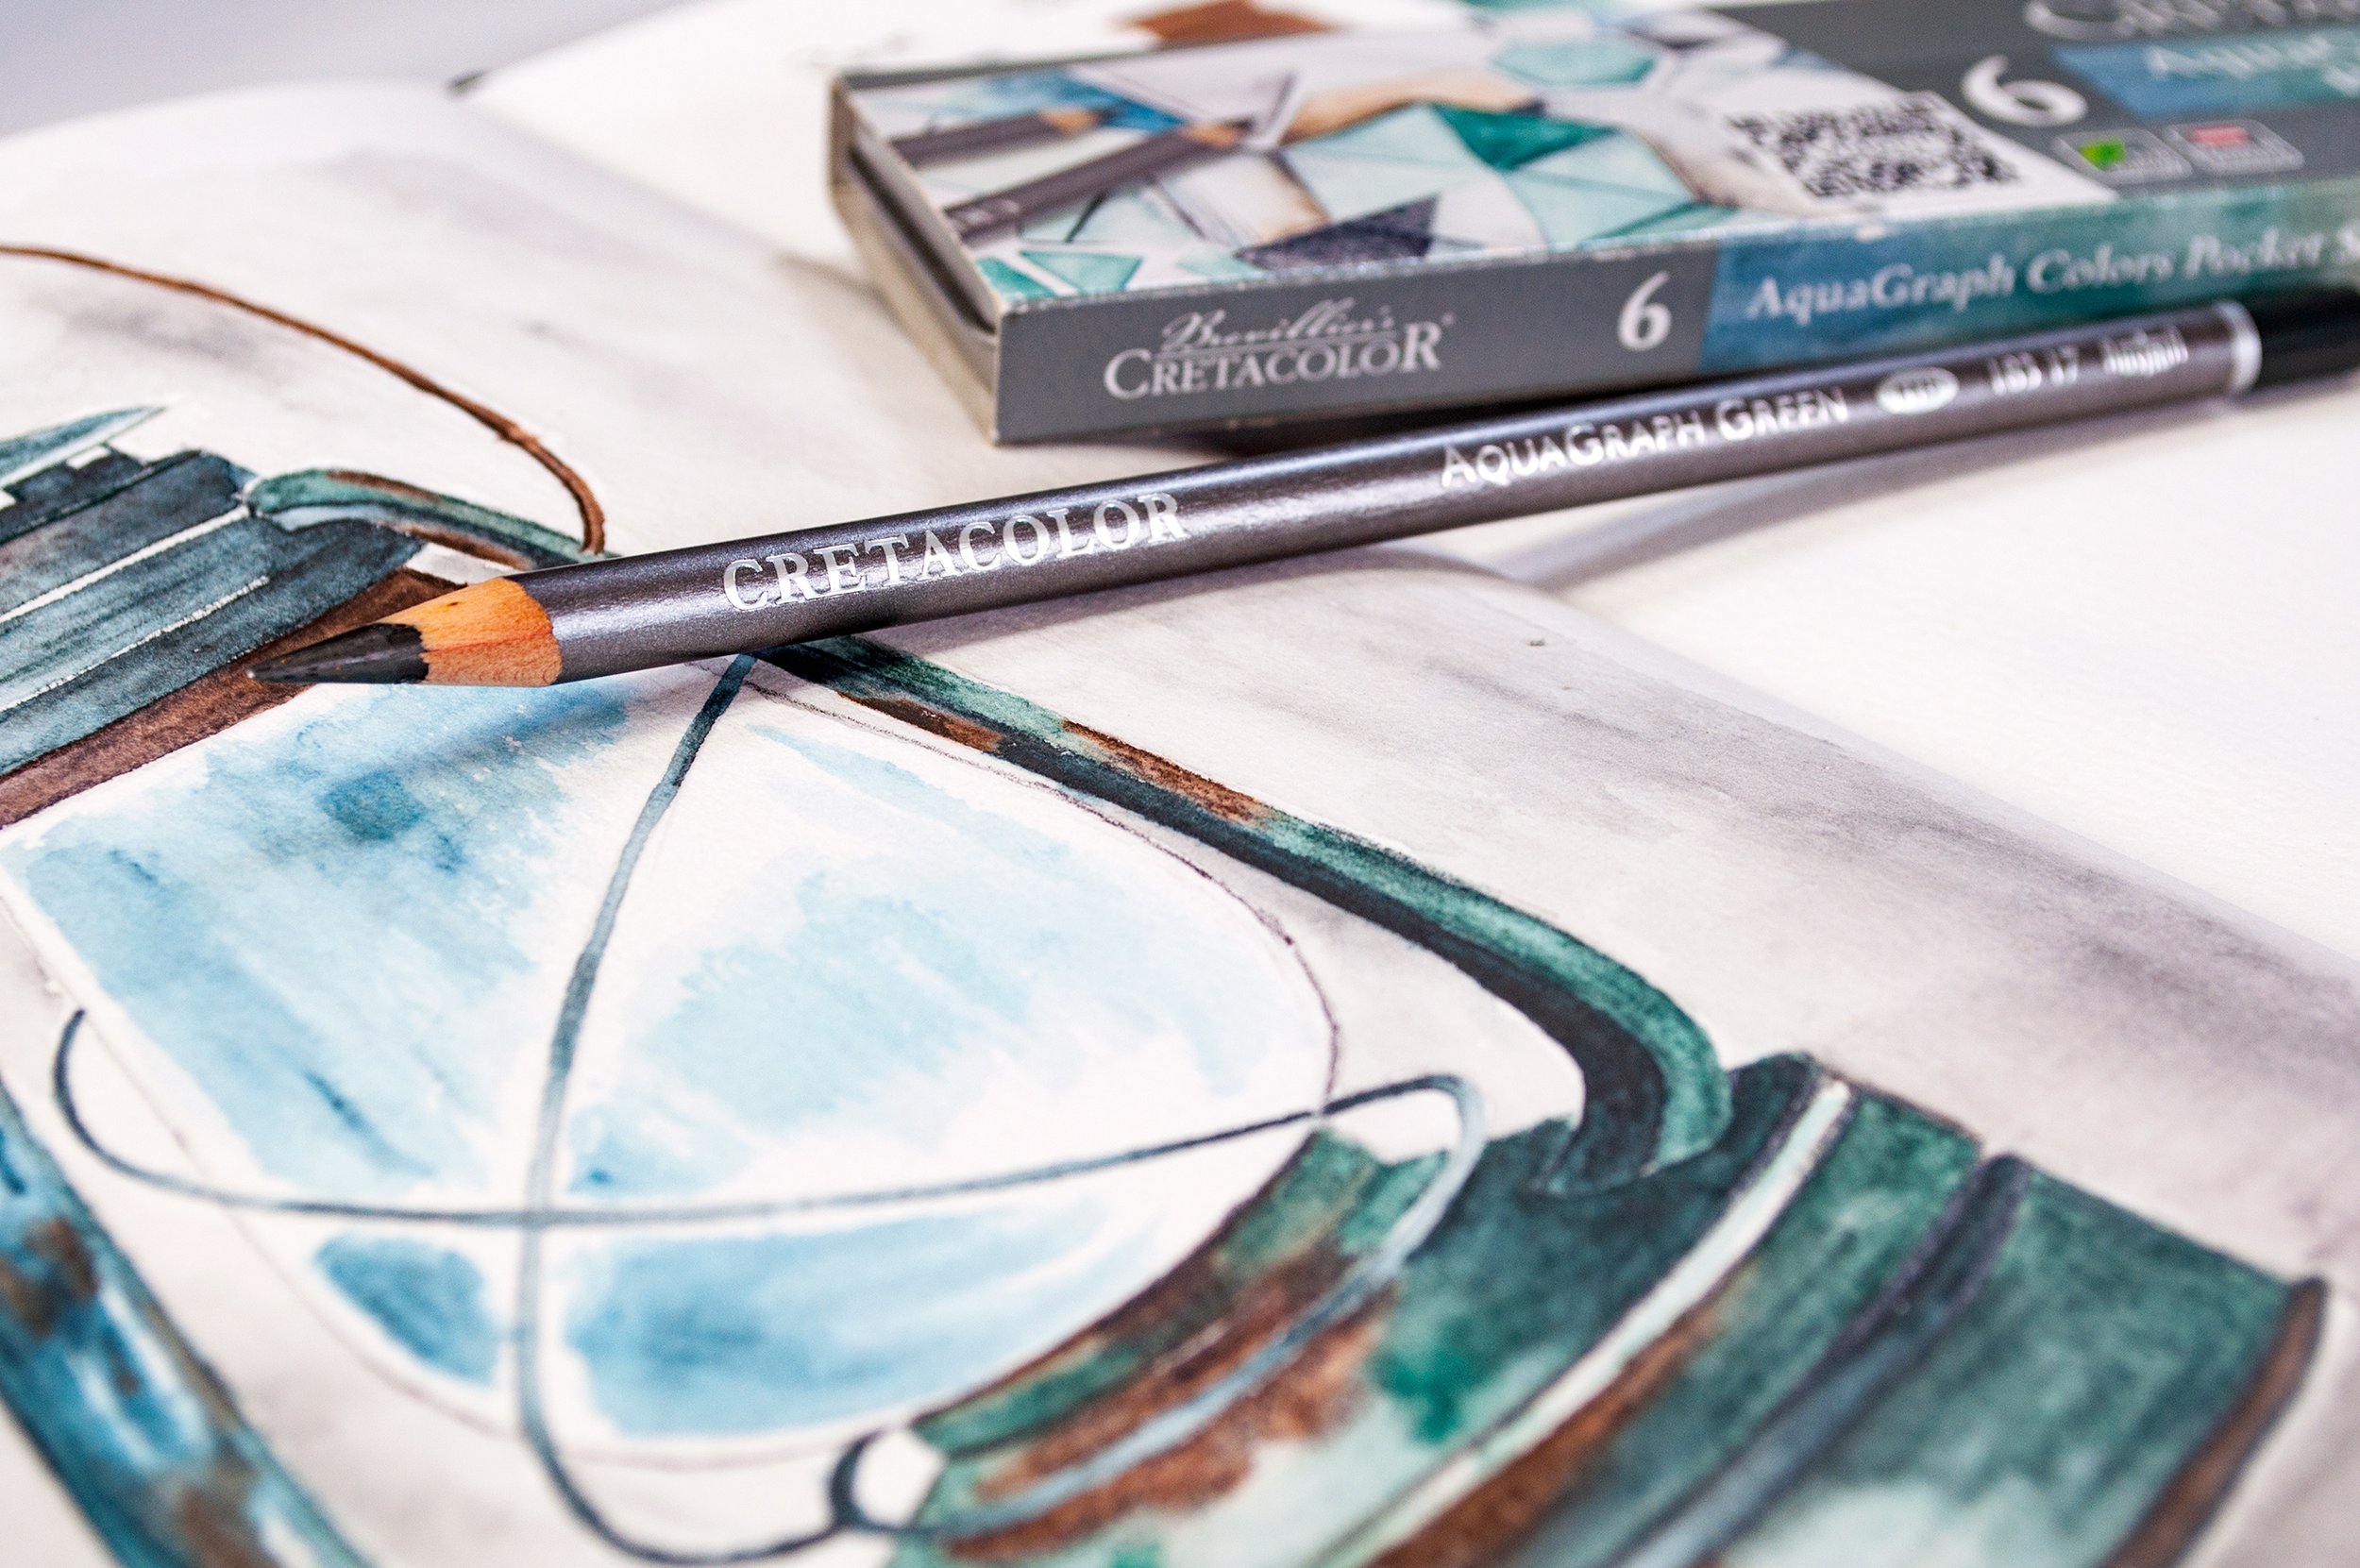 Sketching Media: Cretacolor Creativo Drawing Set (review